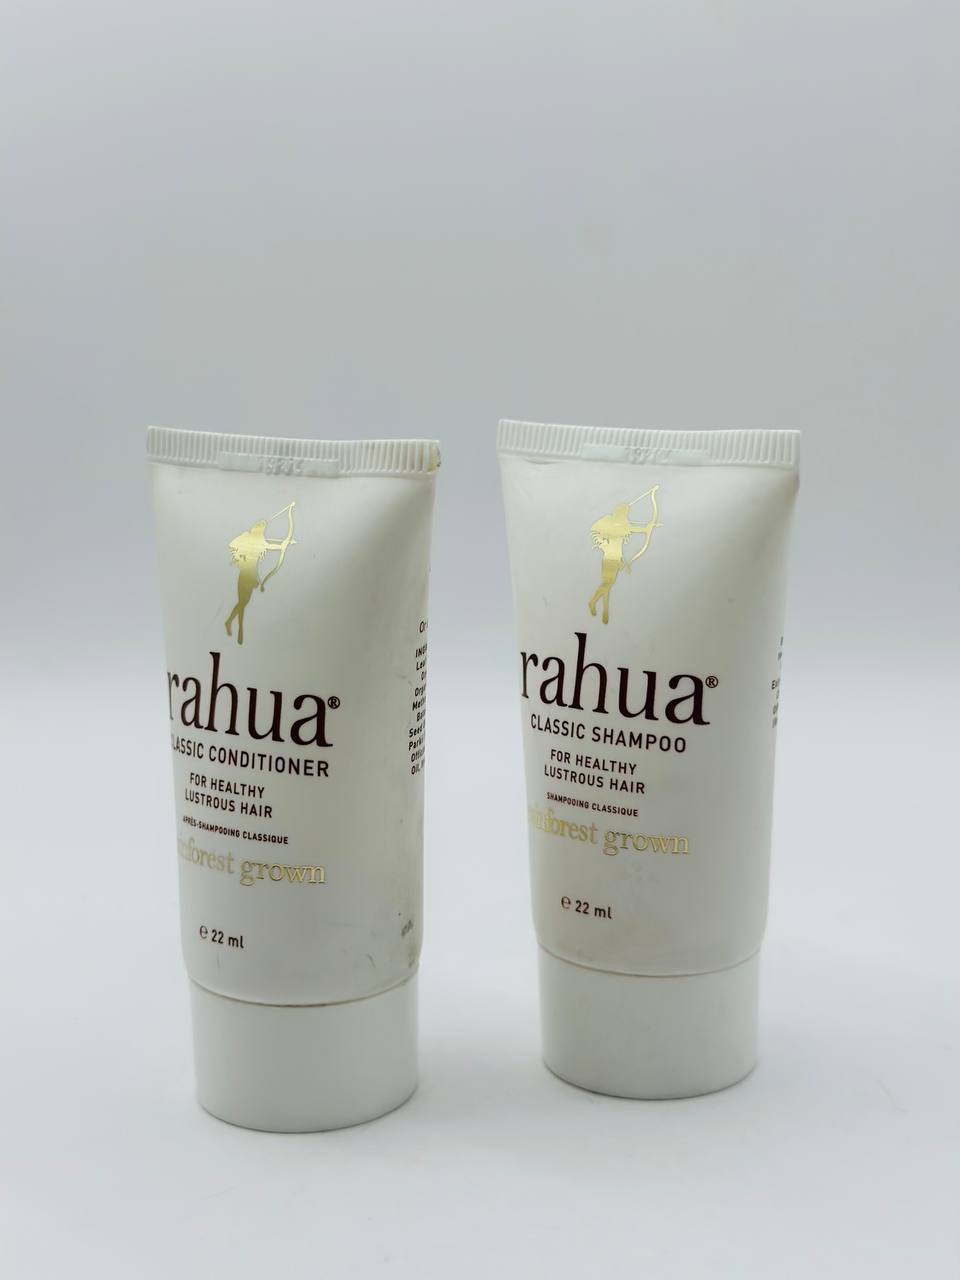 Rahuar shampoo & conditioner 22 ml